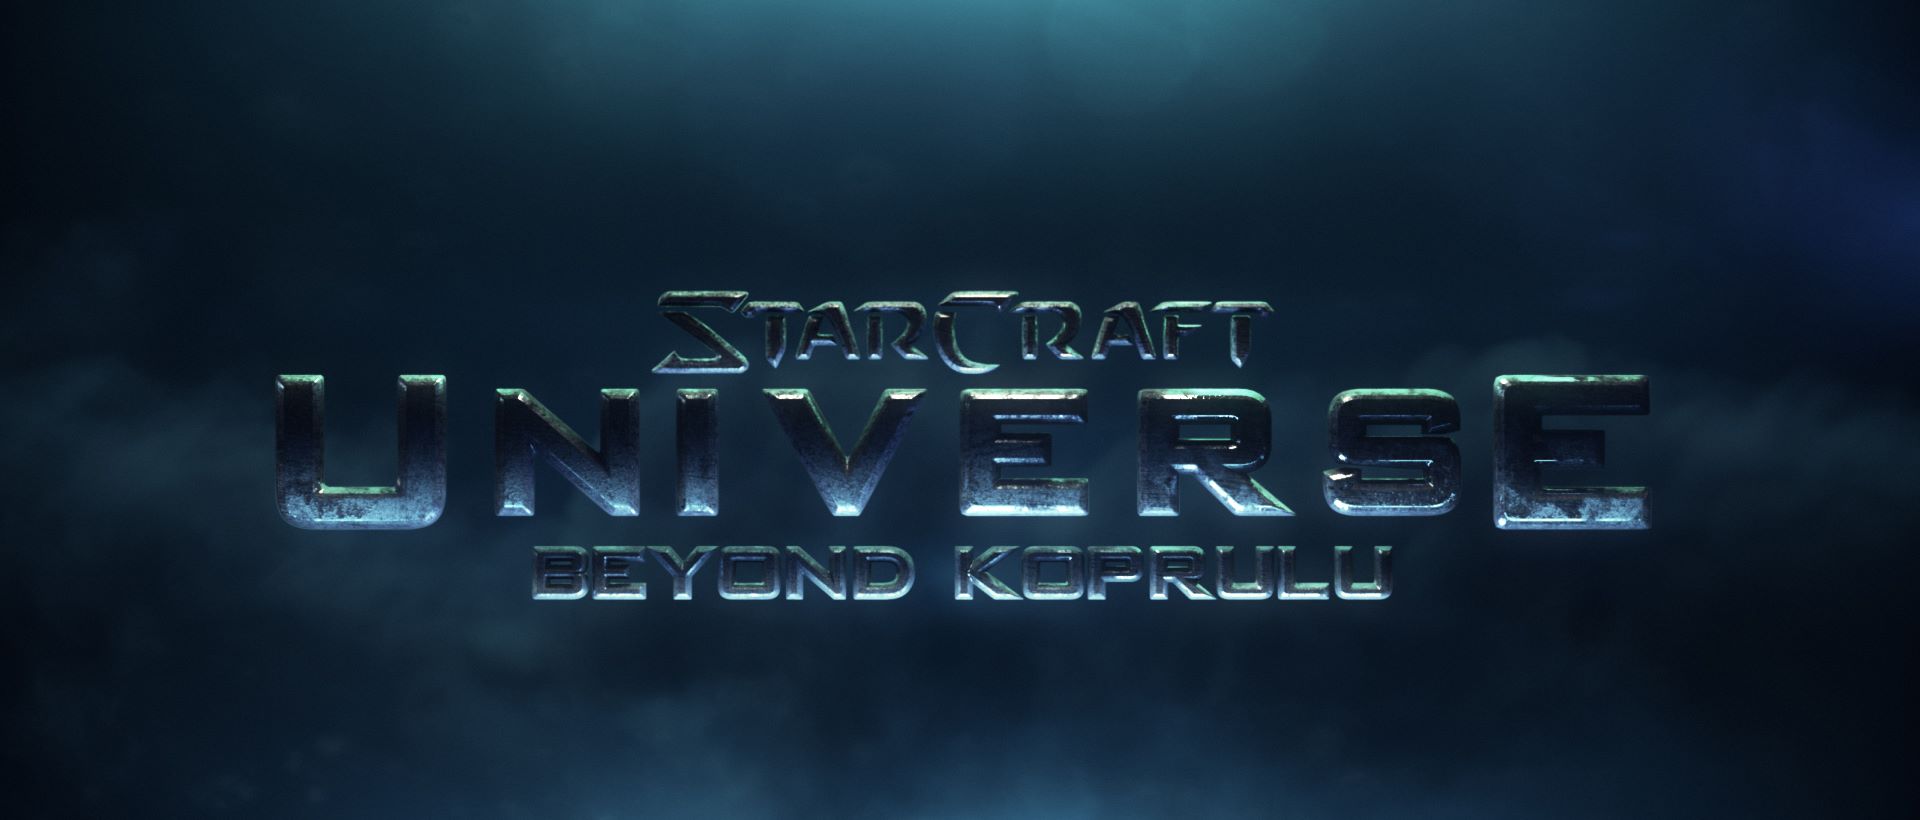 StarCraft Universe Beyond Korpulu